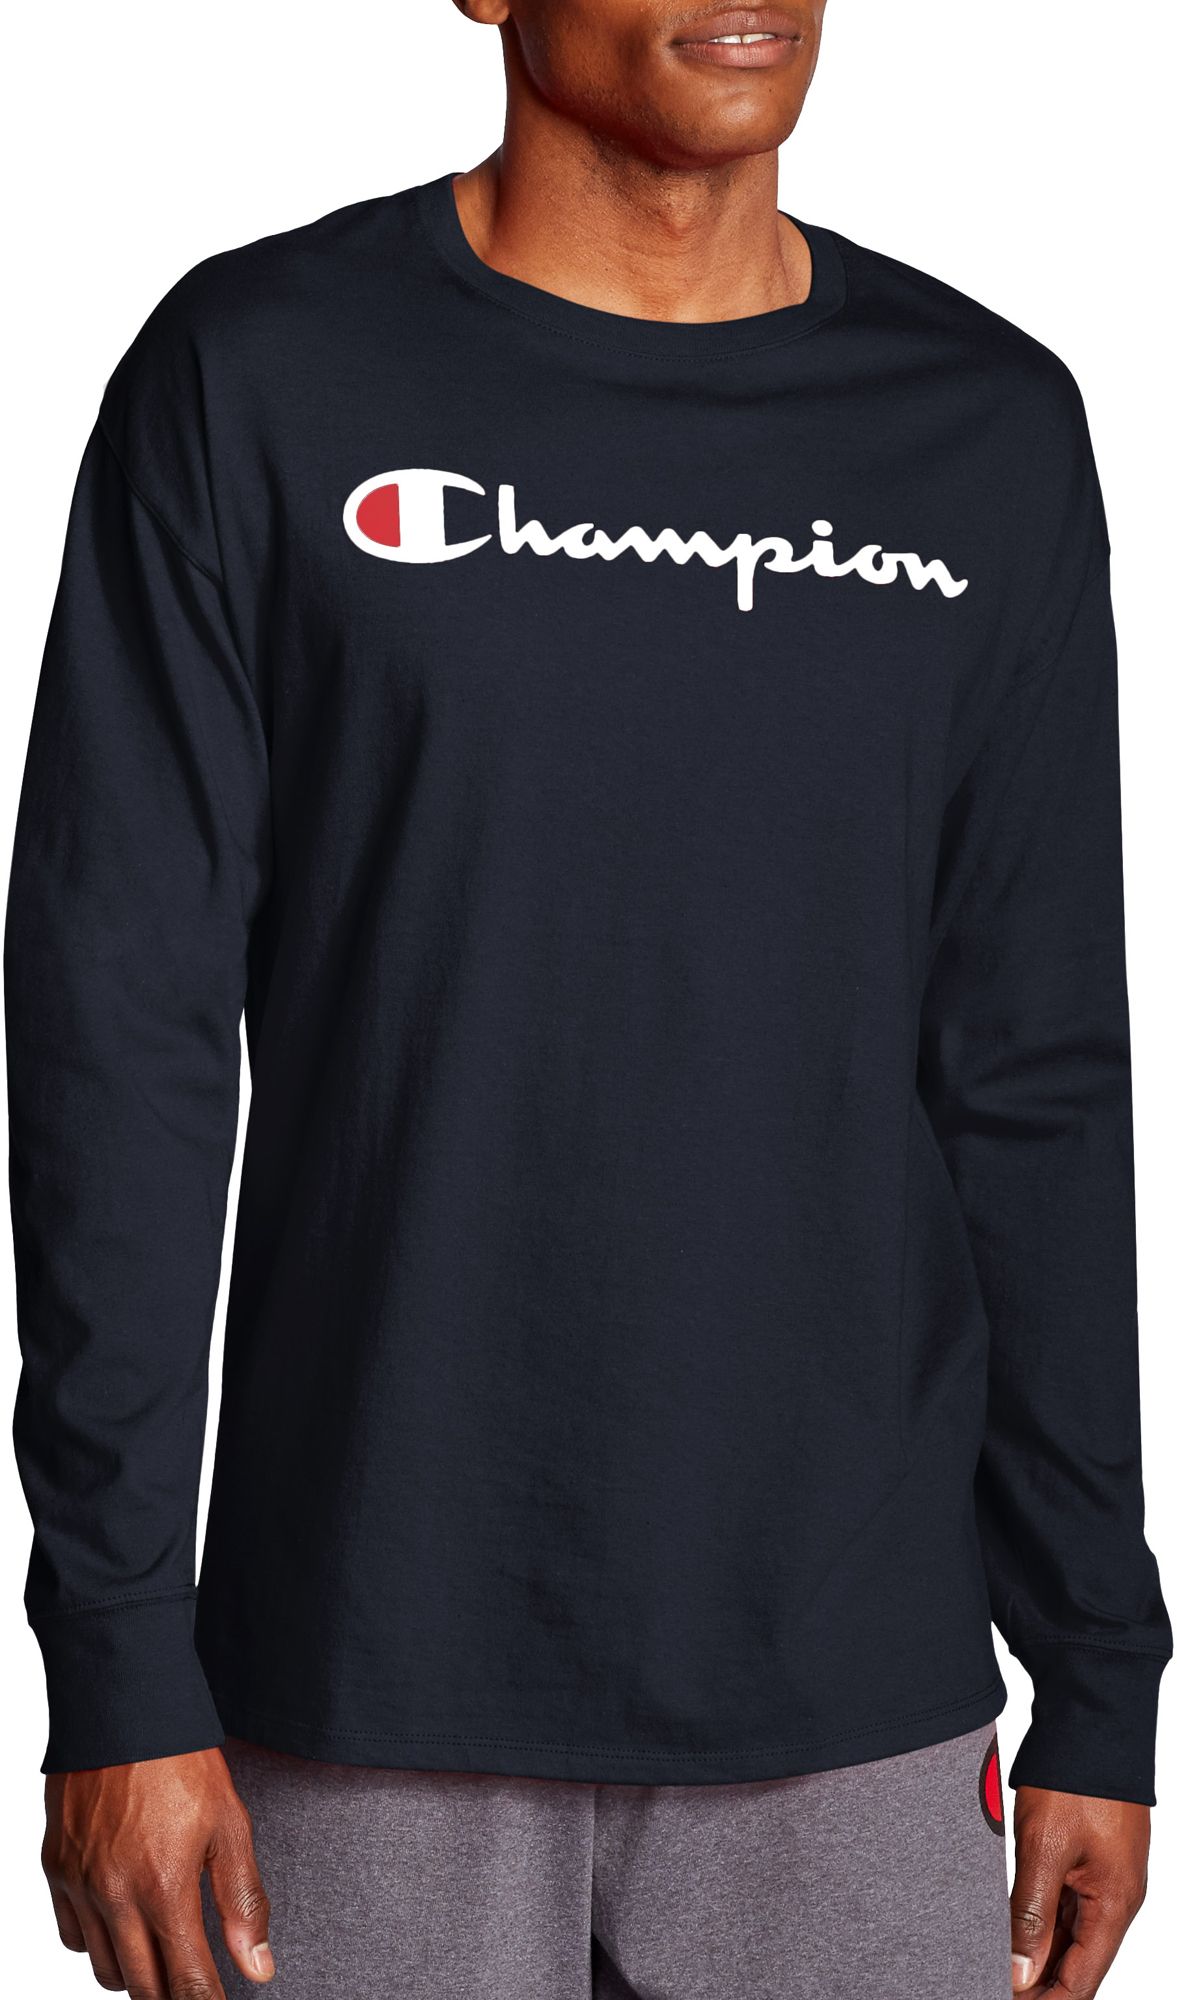 champion men's long sleeve shirt